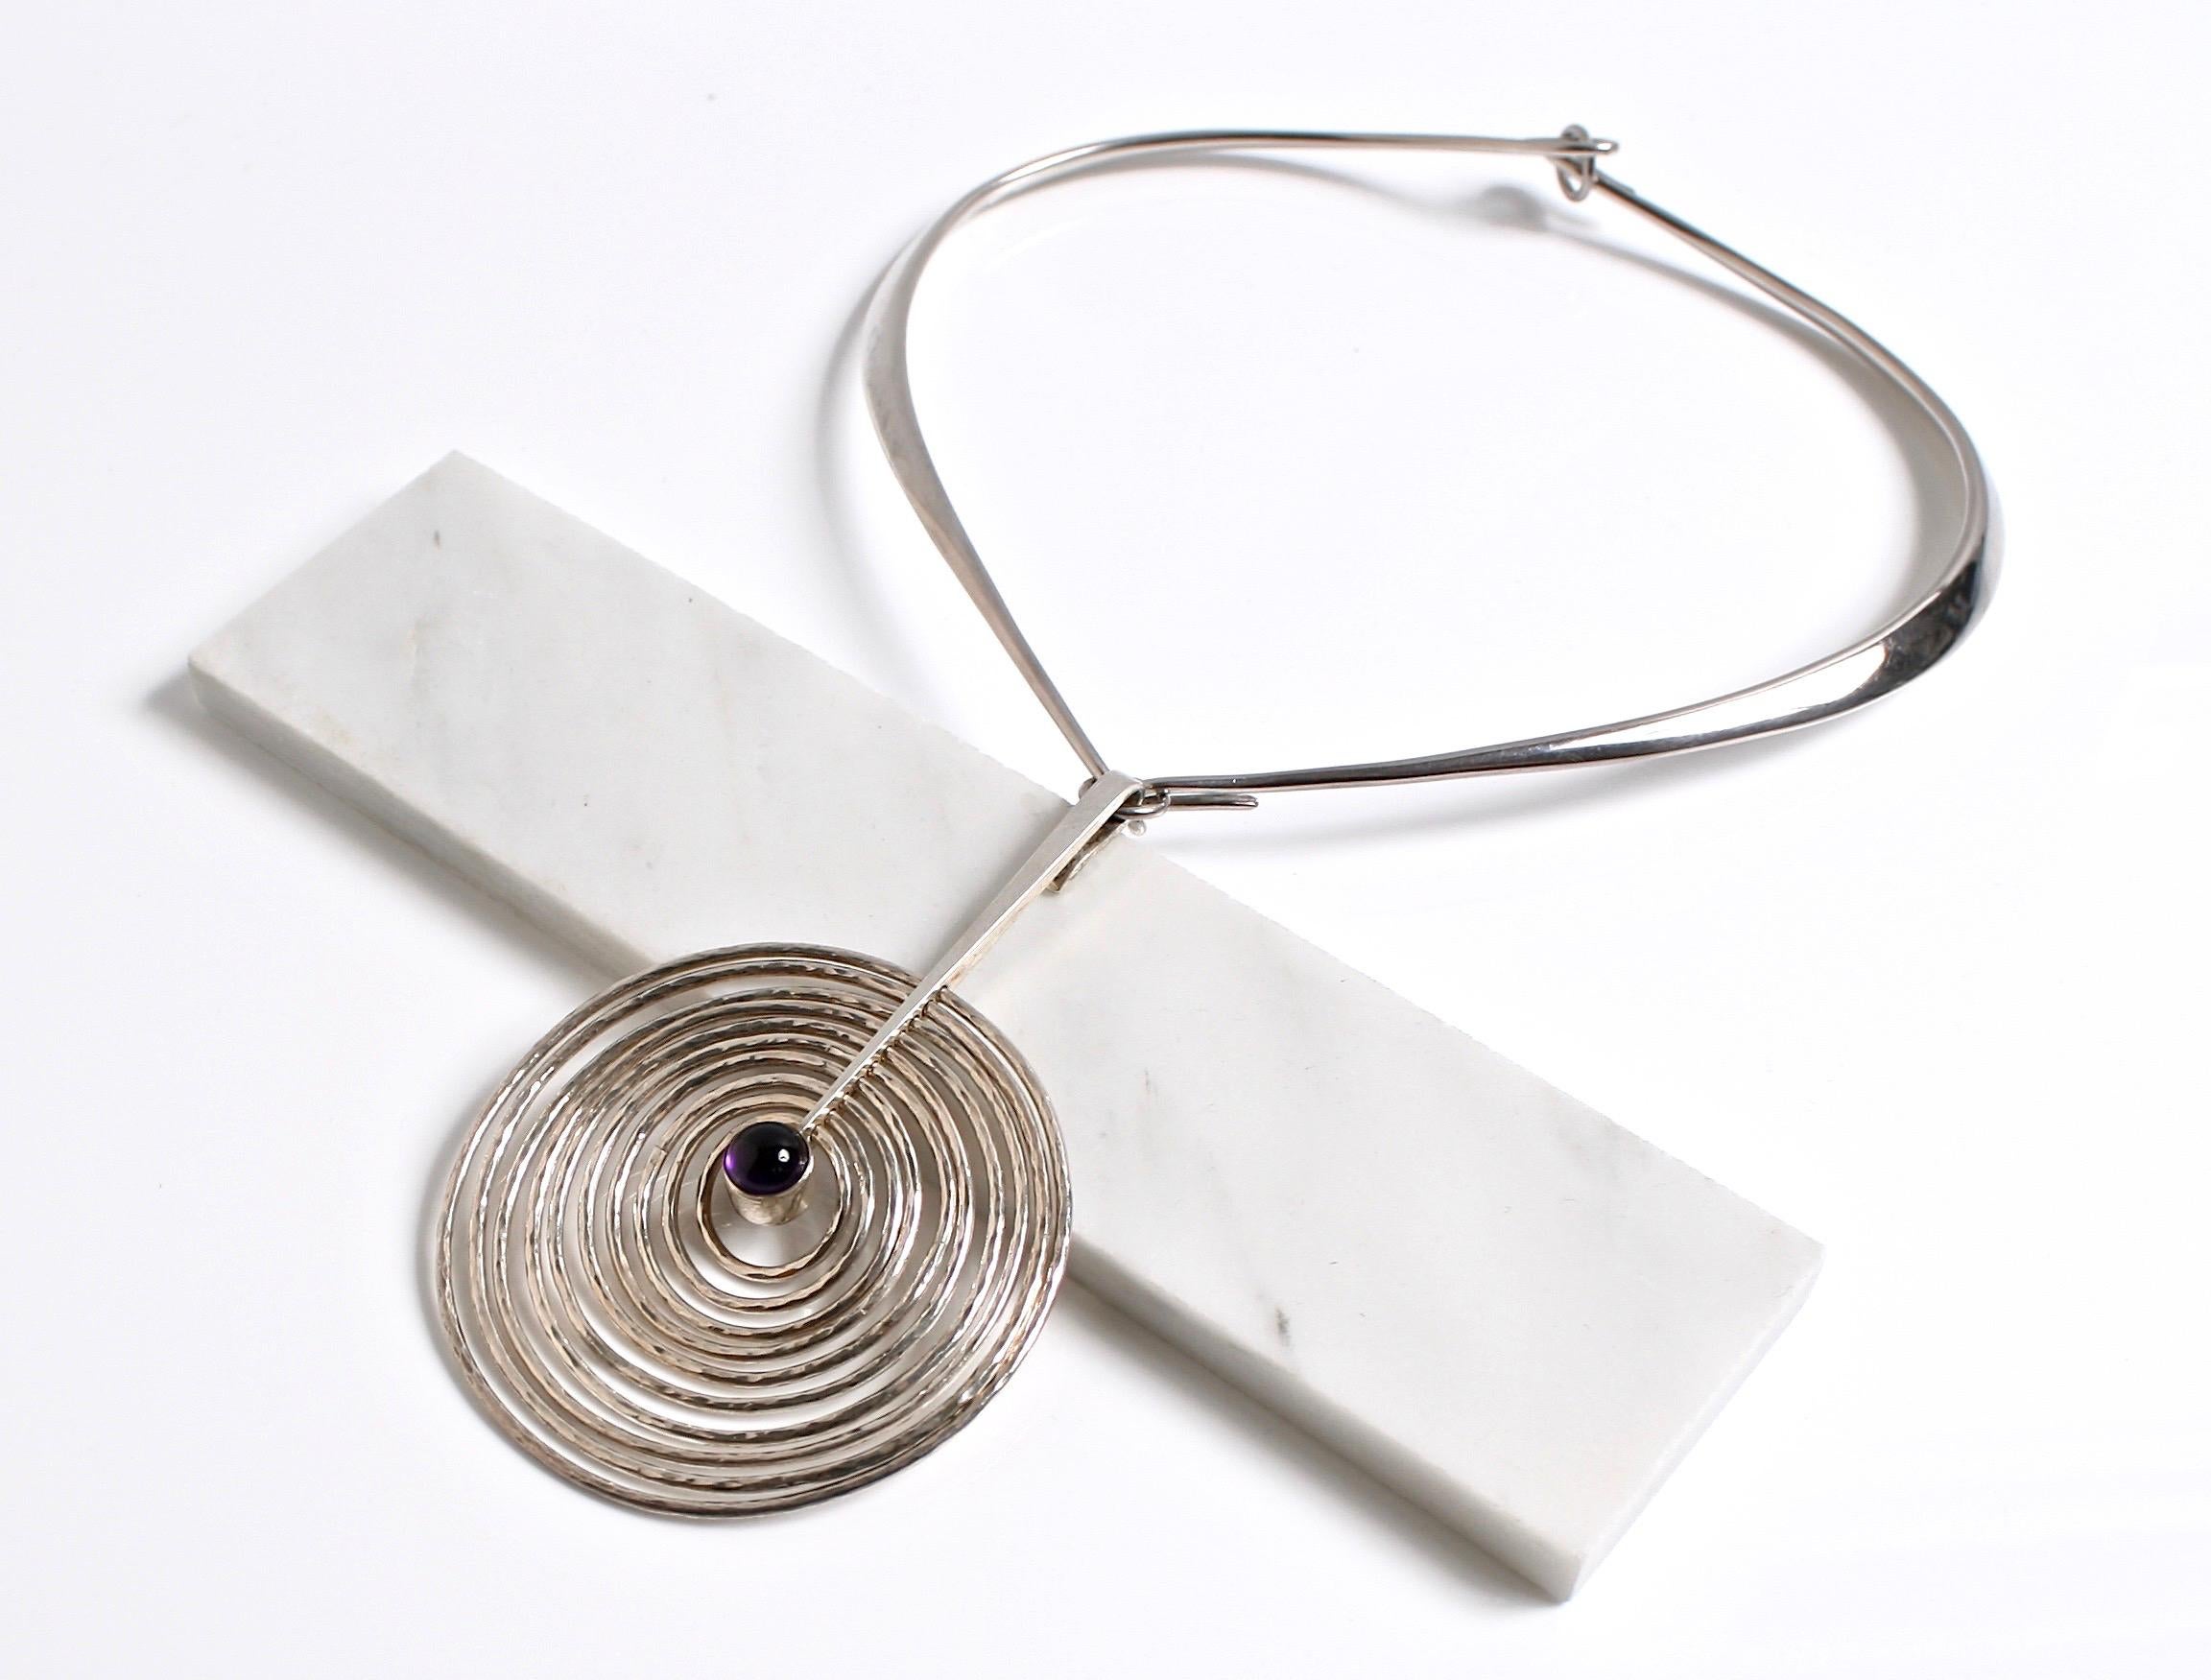 Cabochon Georg Jensen pendant & neckring designed by Bent Gabrielsen Denmark For Sale